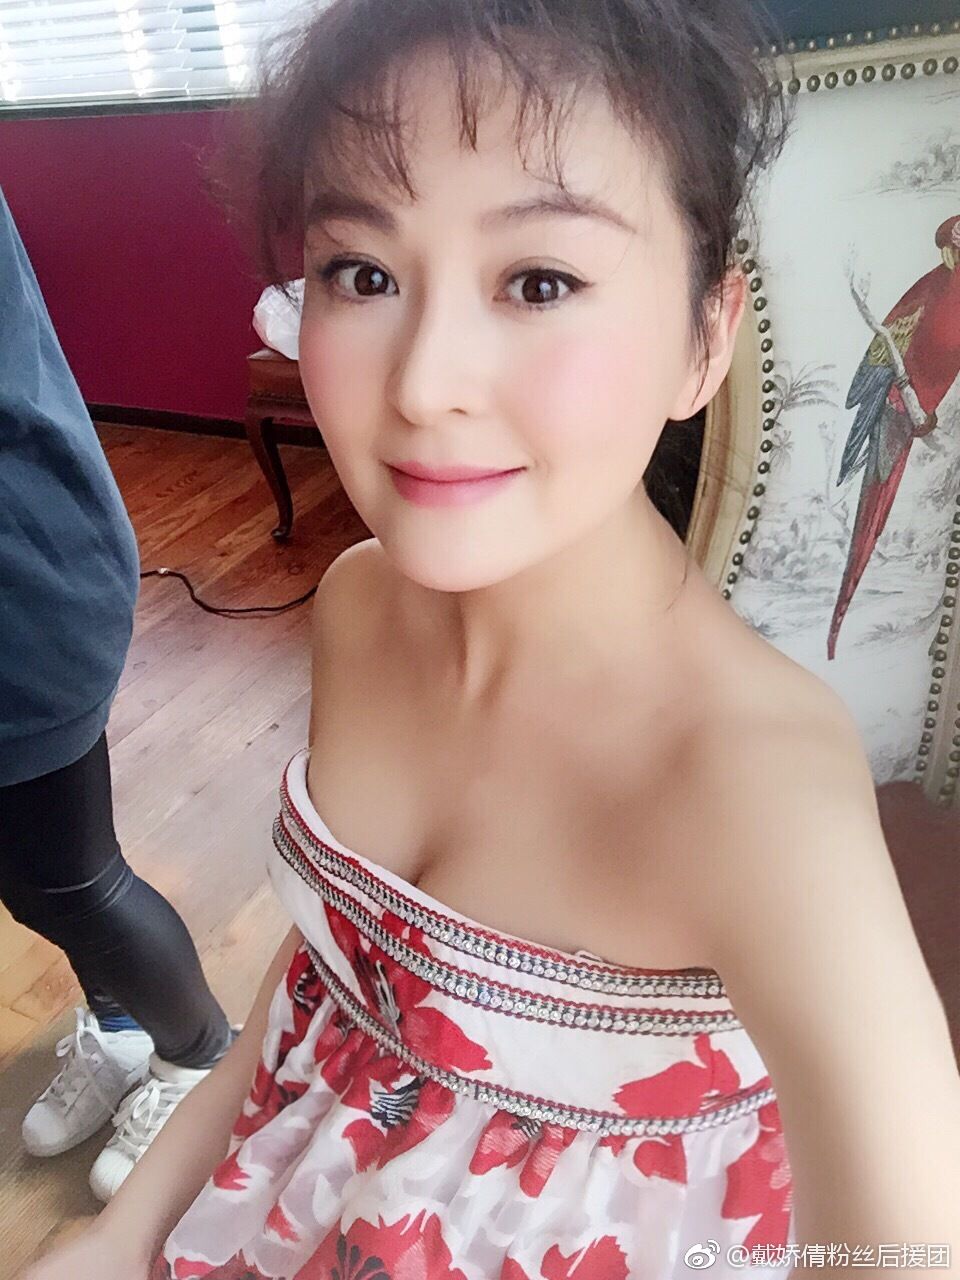 Jiaoqian Dai Sexy and Hottest Photos , Latest Pics